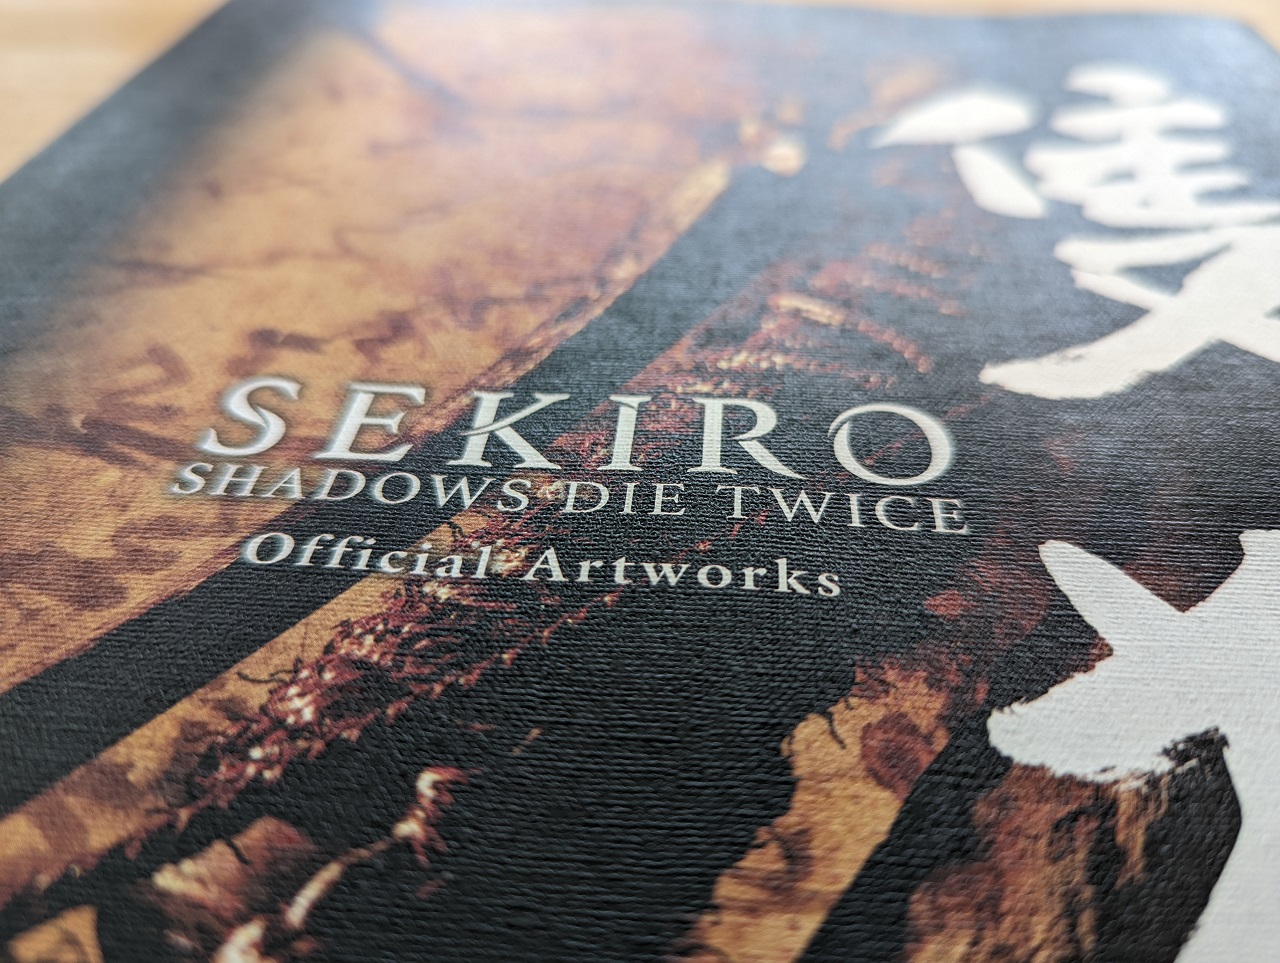 Sekiro: Shadows Die Twice Official Artworks